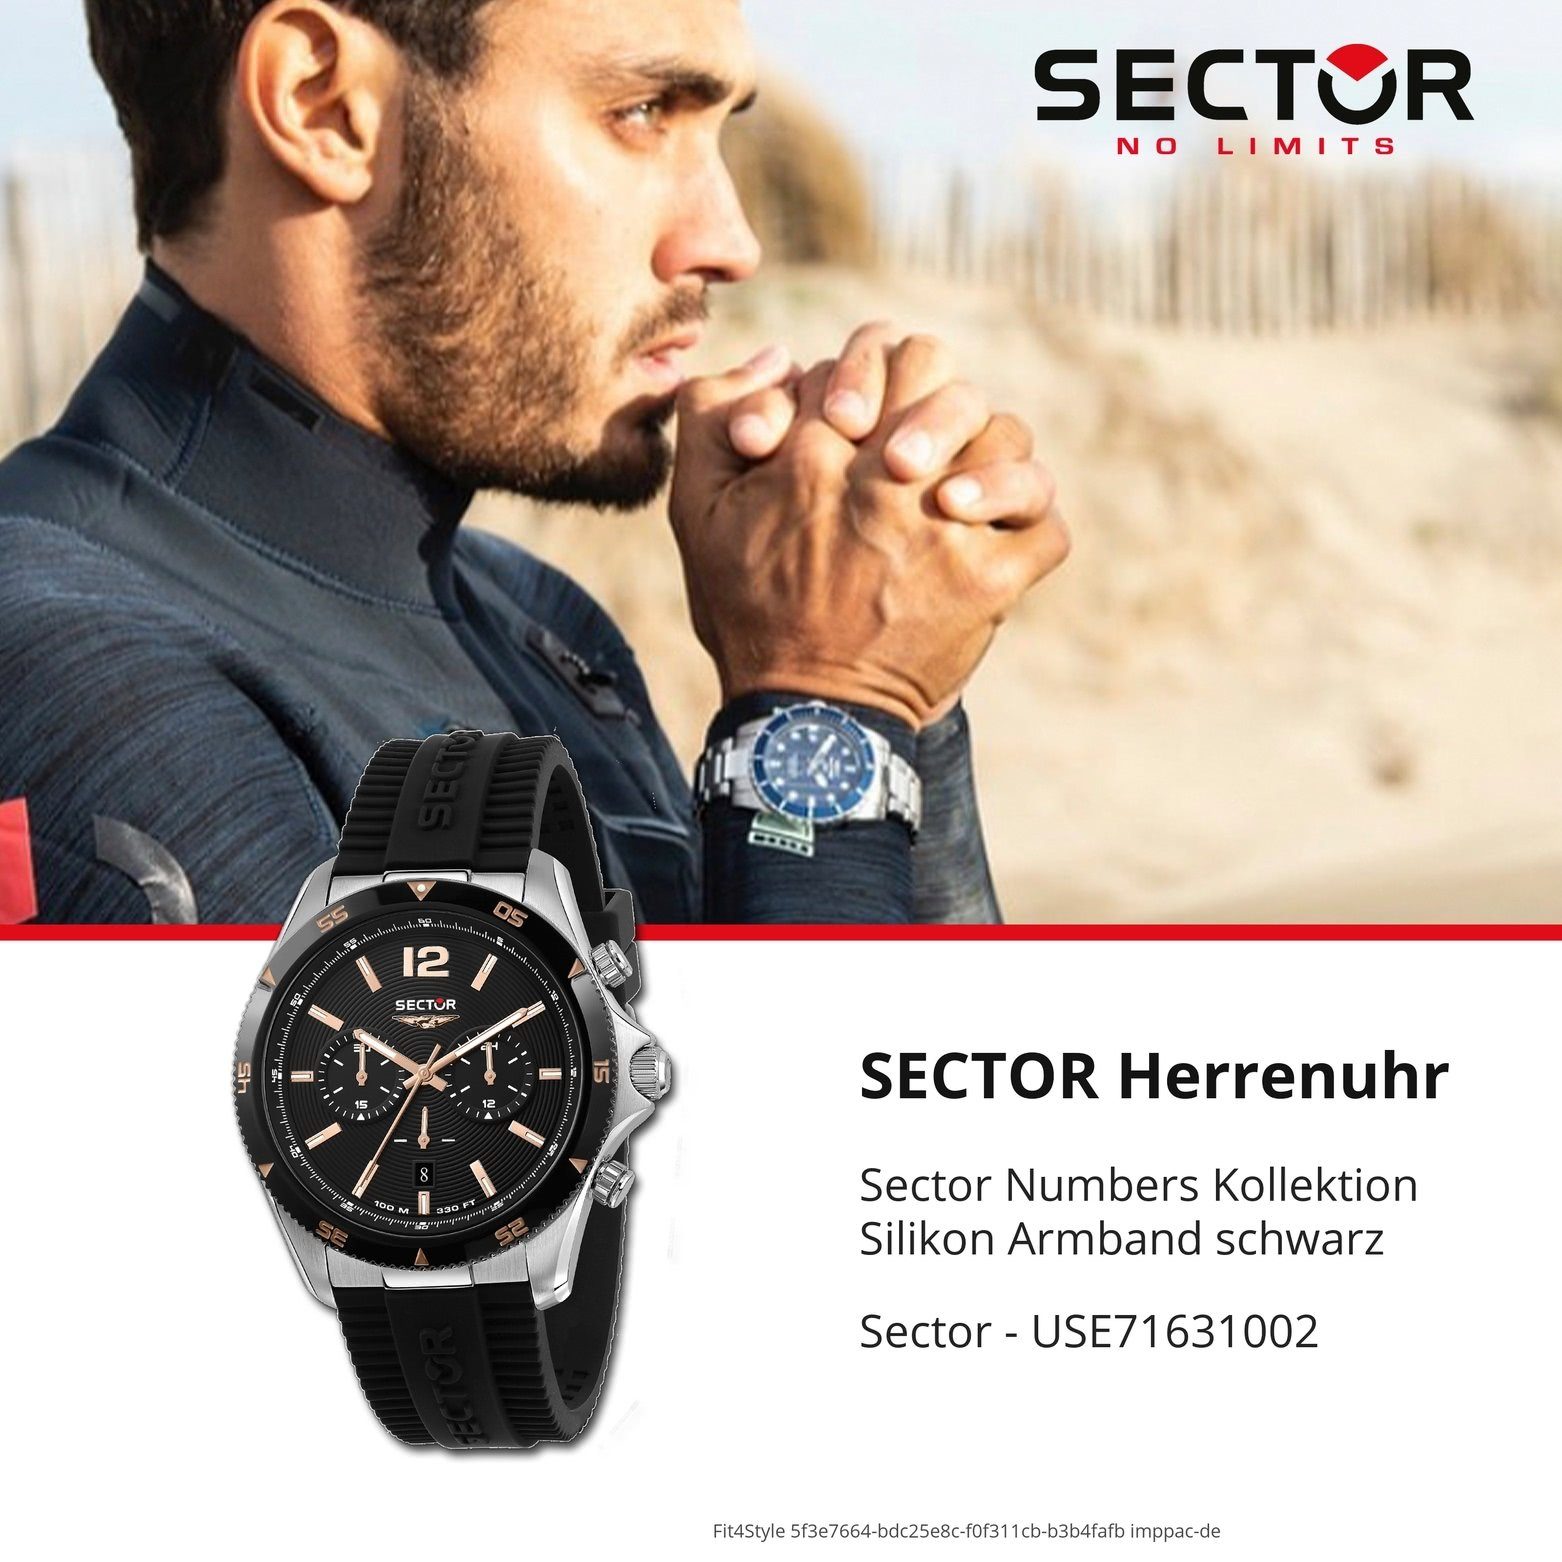 Sector Chronograph Sector Eleg Armbanduhr Chrono, klein Silikonarmband rund, Armbanduhr (ca. Herren 30mm), schwarz, Herren